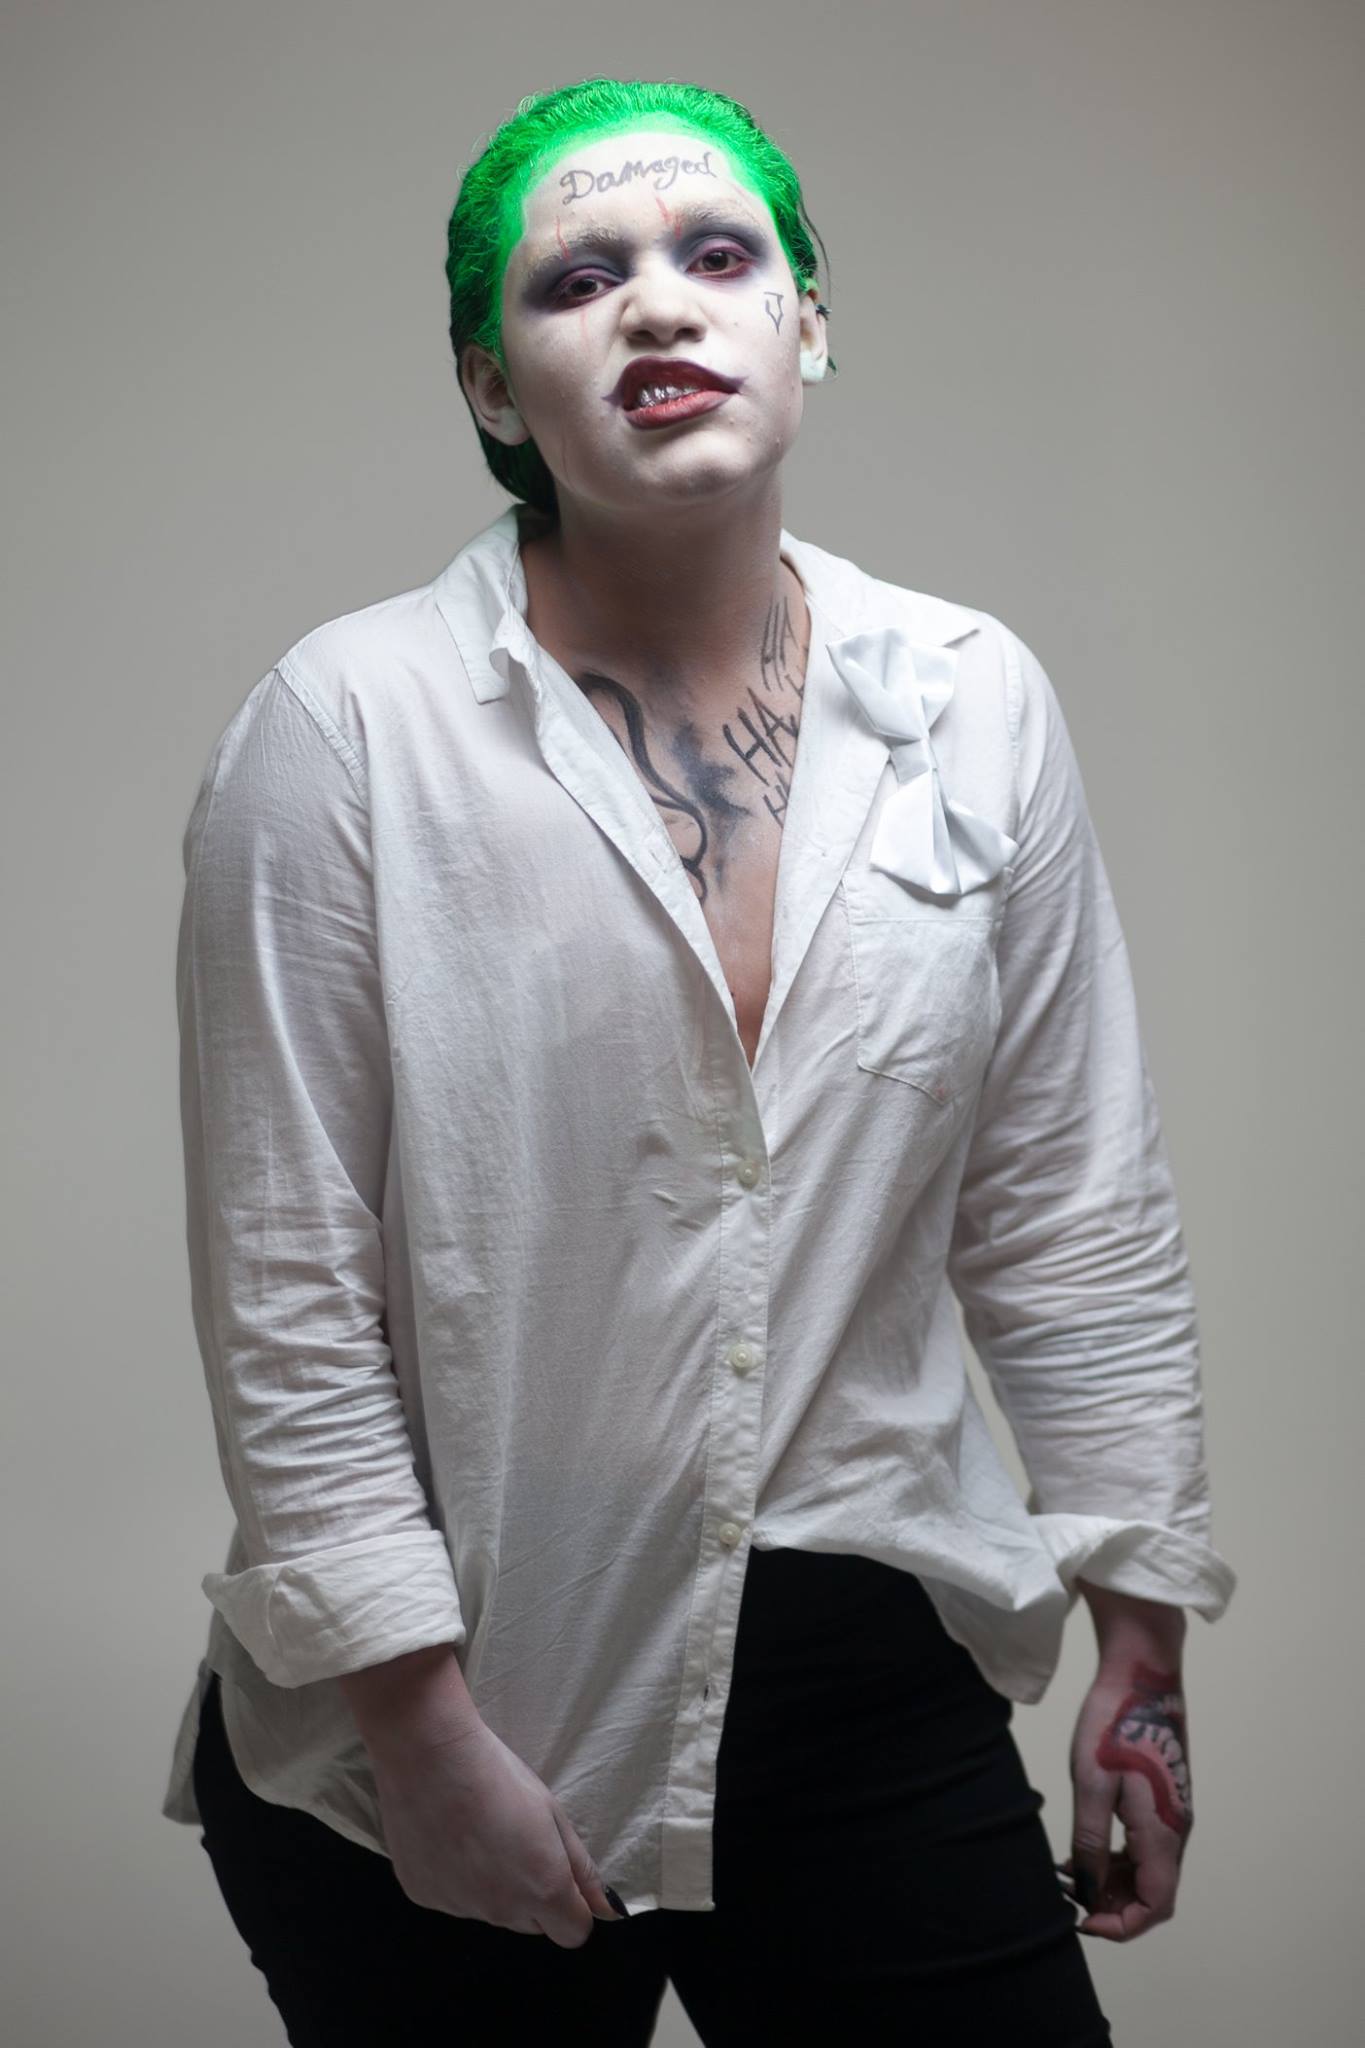 Halloween Joker makeup